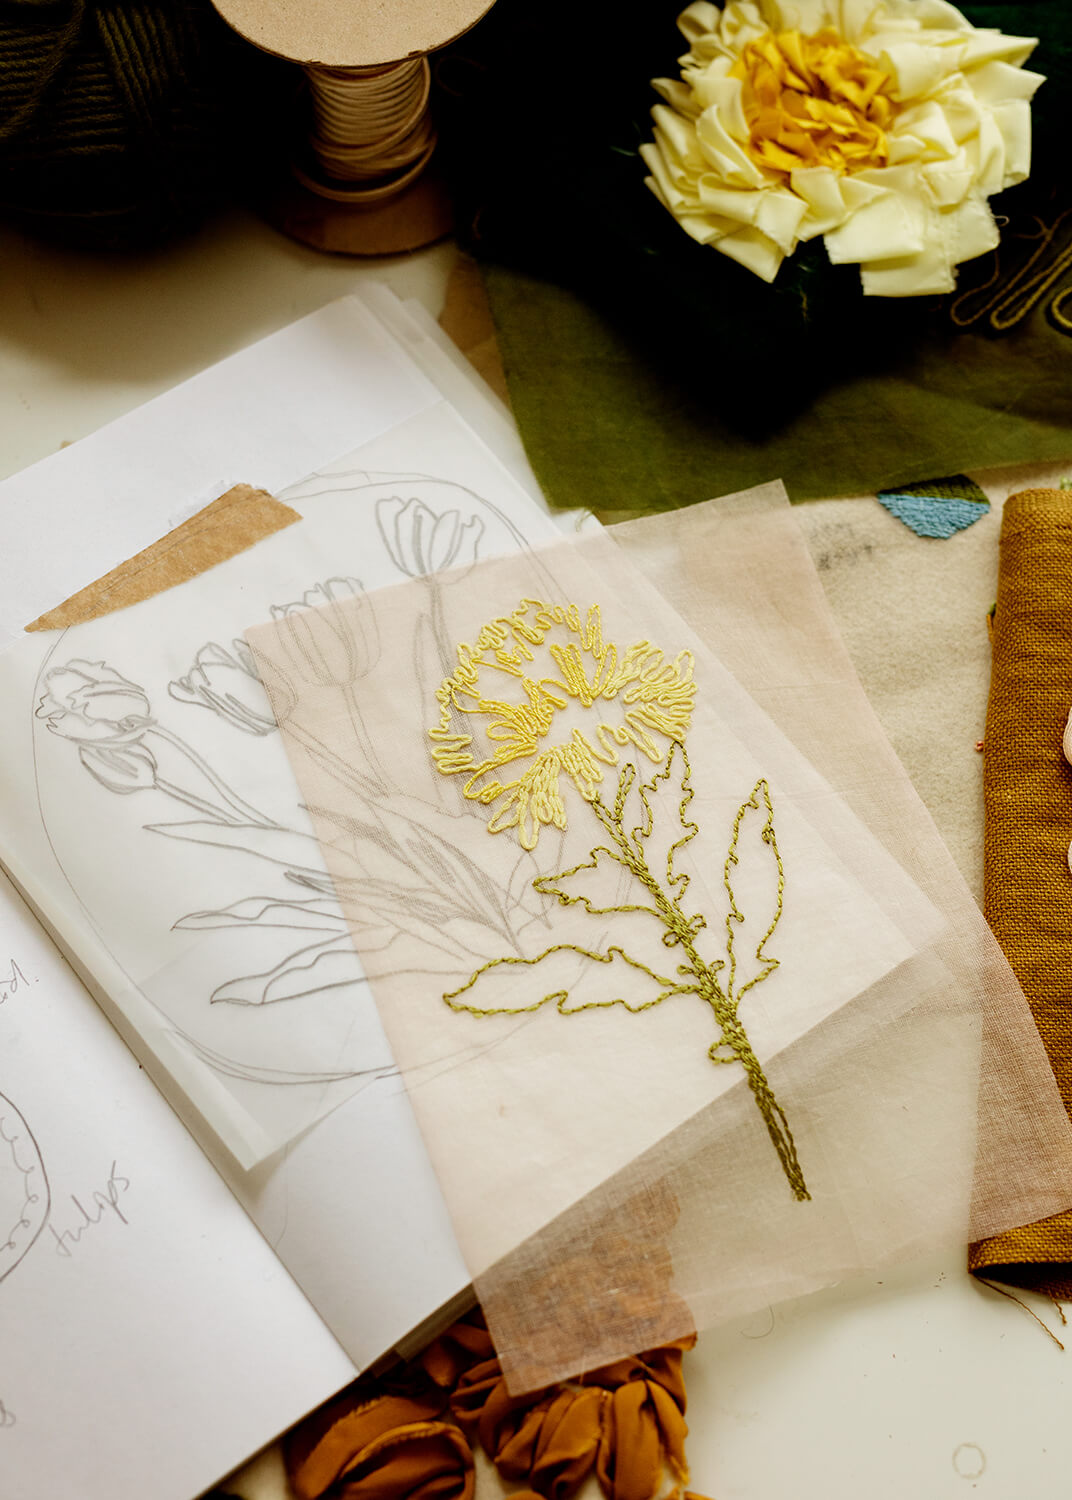 Detail of embroidered flower by workshop tutor Lora Avedian, France.